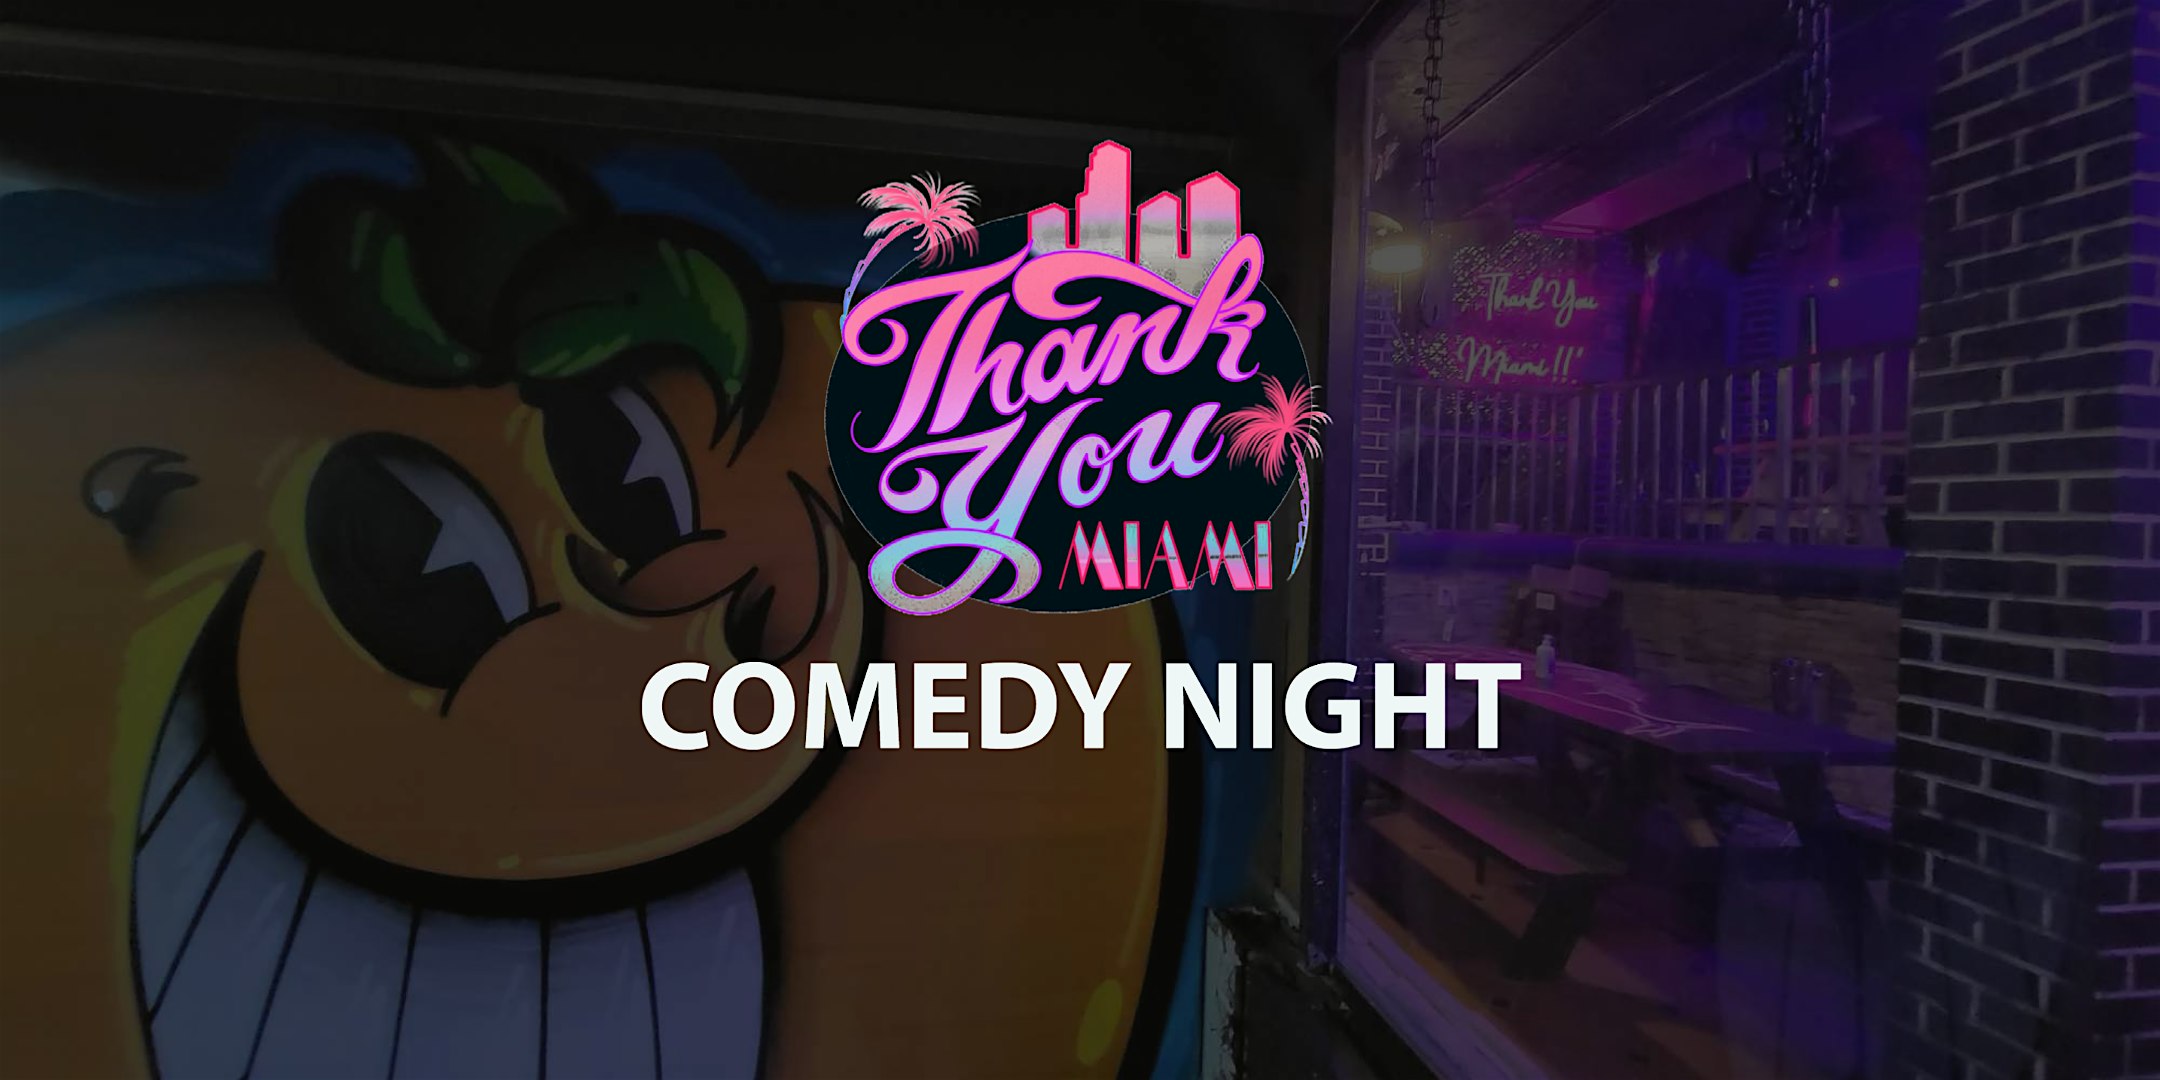 Thank You Miami Comedy Night (Friday)